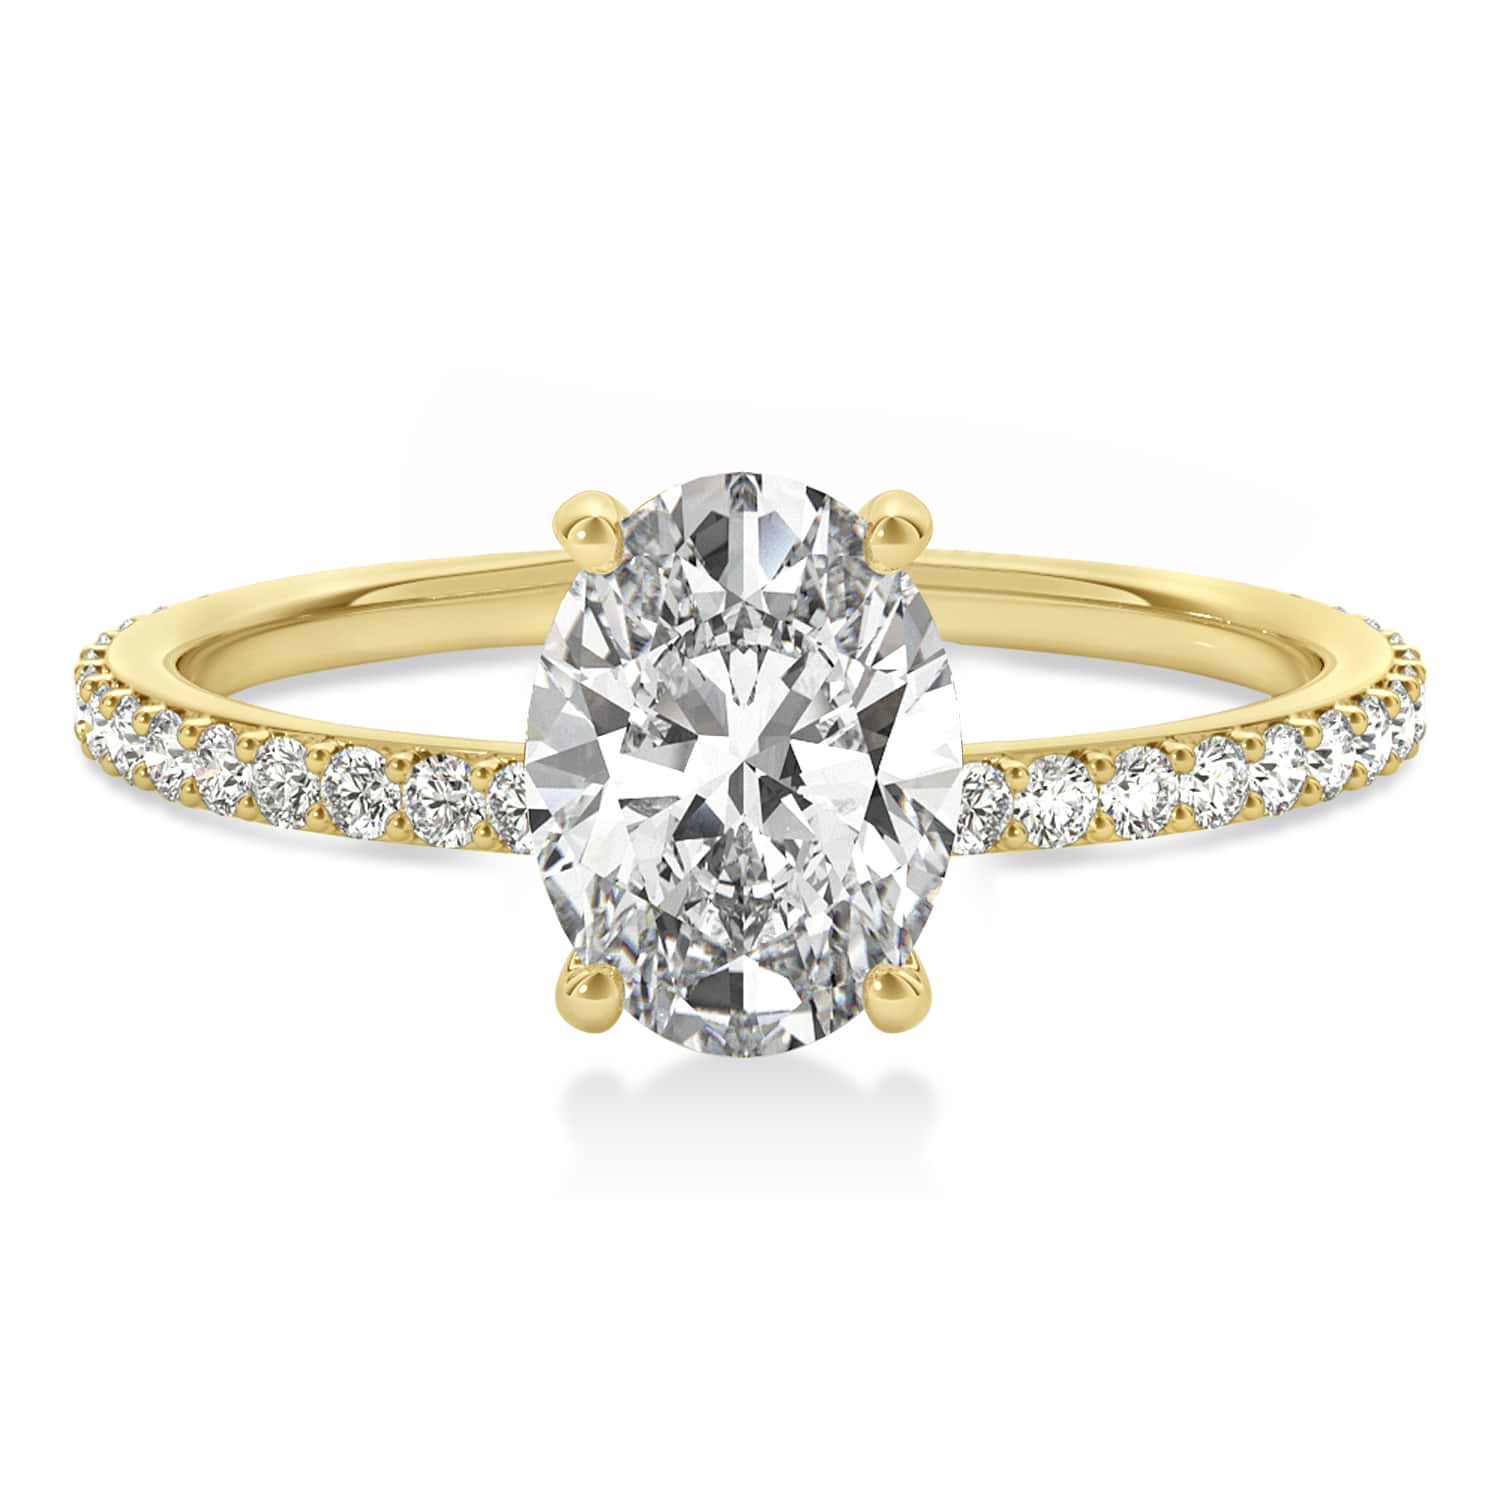 Oval Diamond Hidden Halo Engagement Ring 18k Yellow Gold (2.50ct)